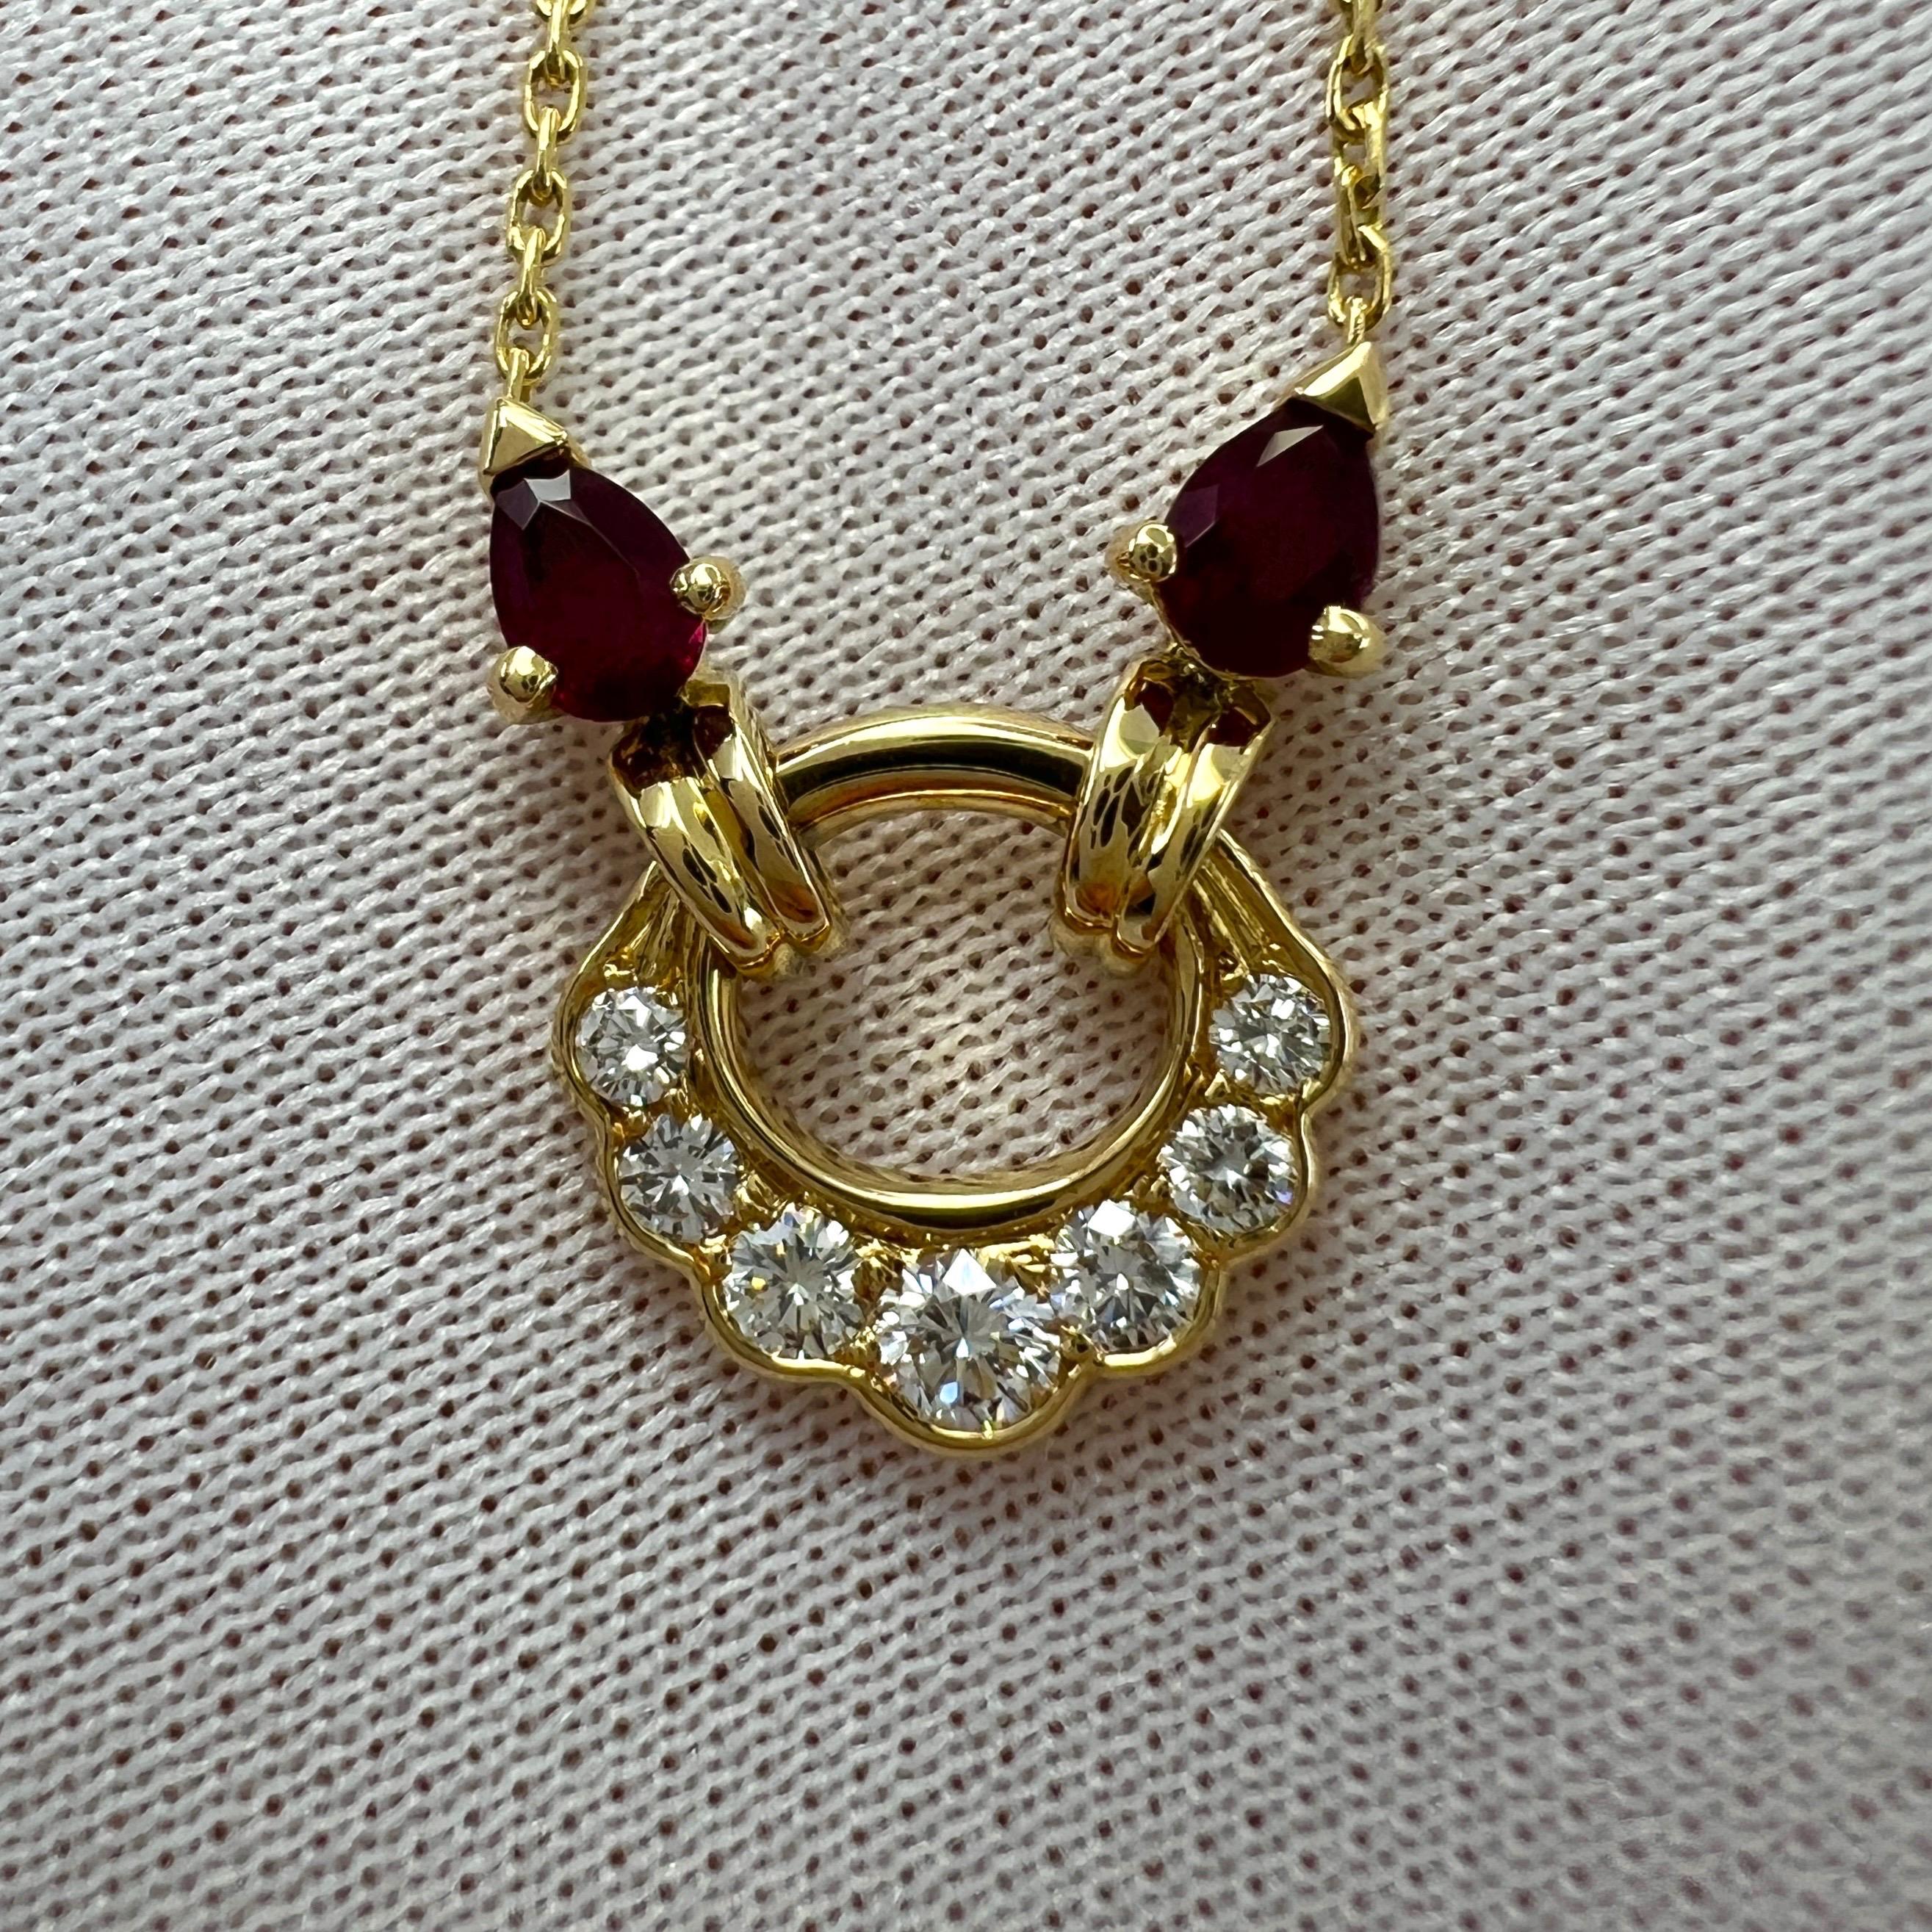 Rare Vintage Van Cleef & Arpels Ruby Diamond 18k Yellow Gold Pendant Necklace For Sale 1